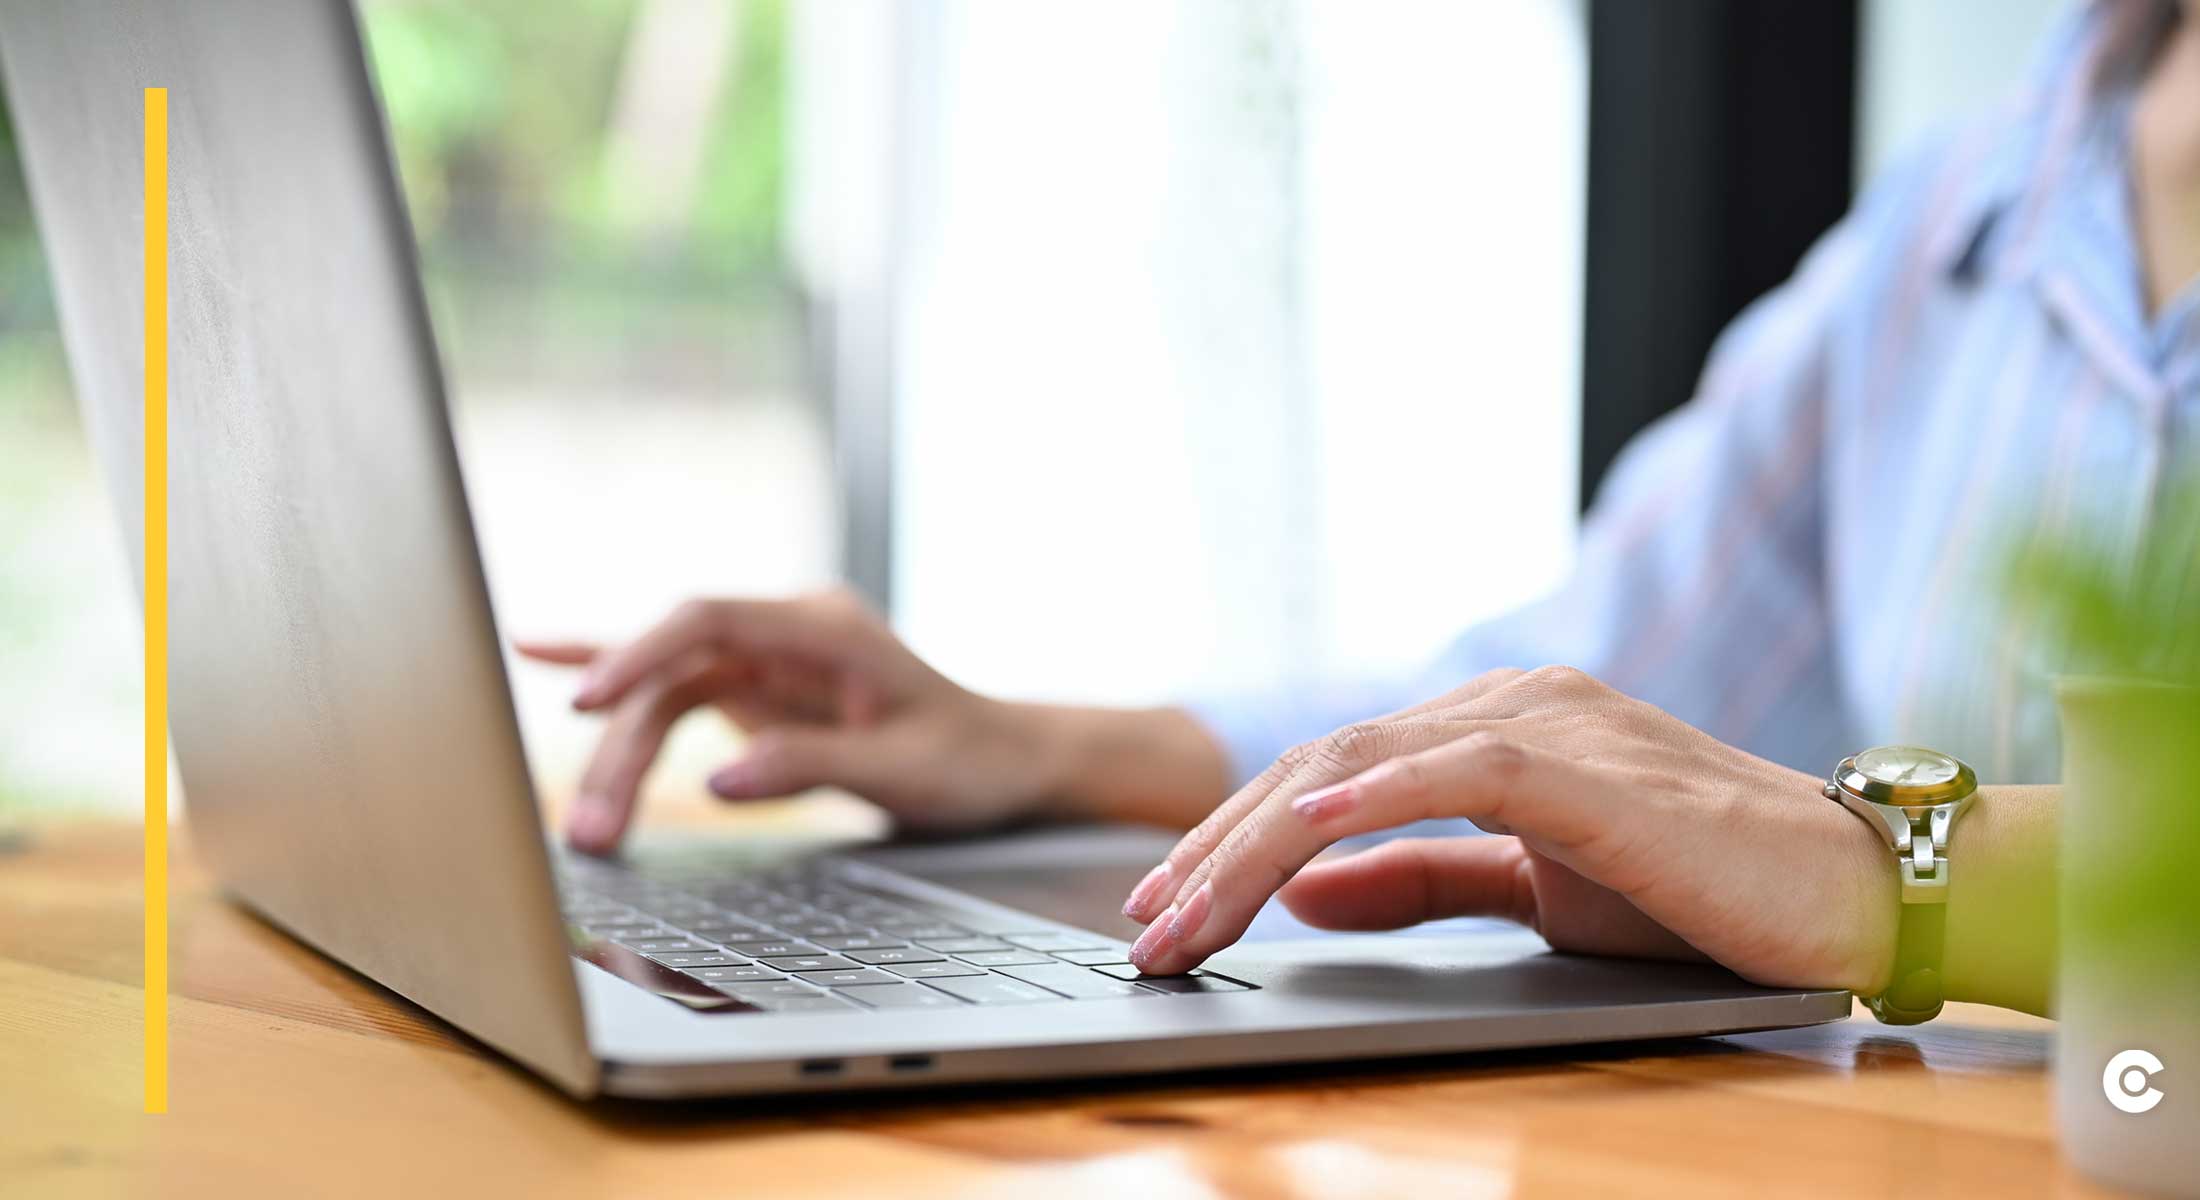 A woman types on a laptop keyboard